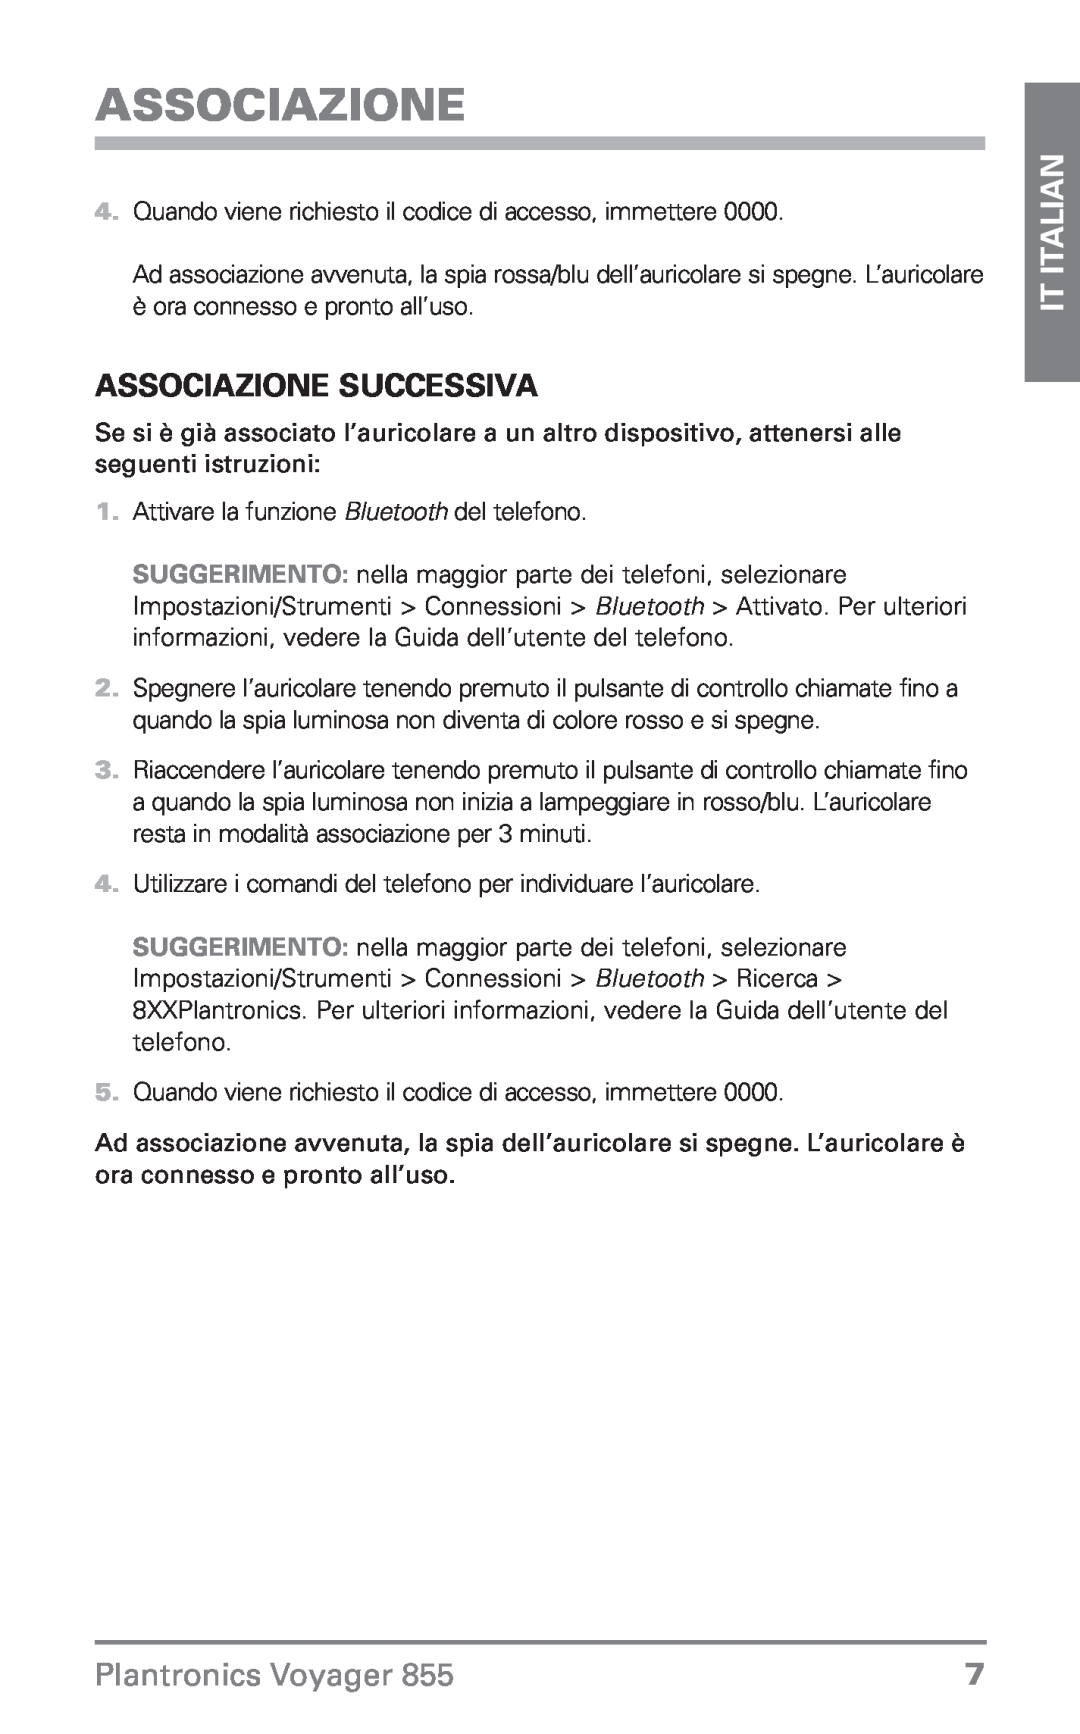 Plantronics Voyager 855 manual do utilizador Associazione successiva, IT Italian, Plantronics Voyager 